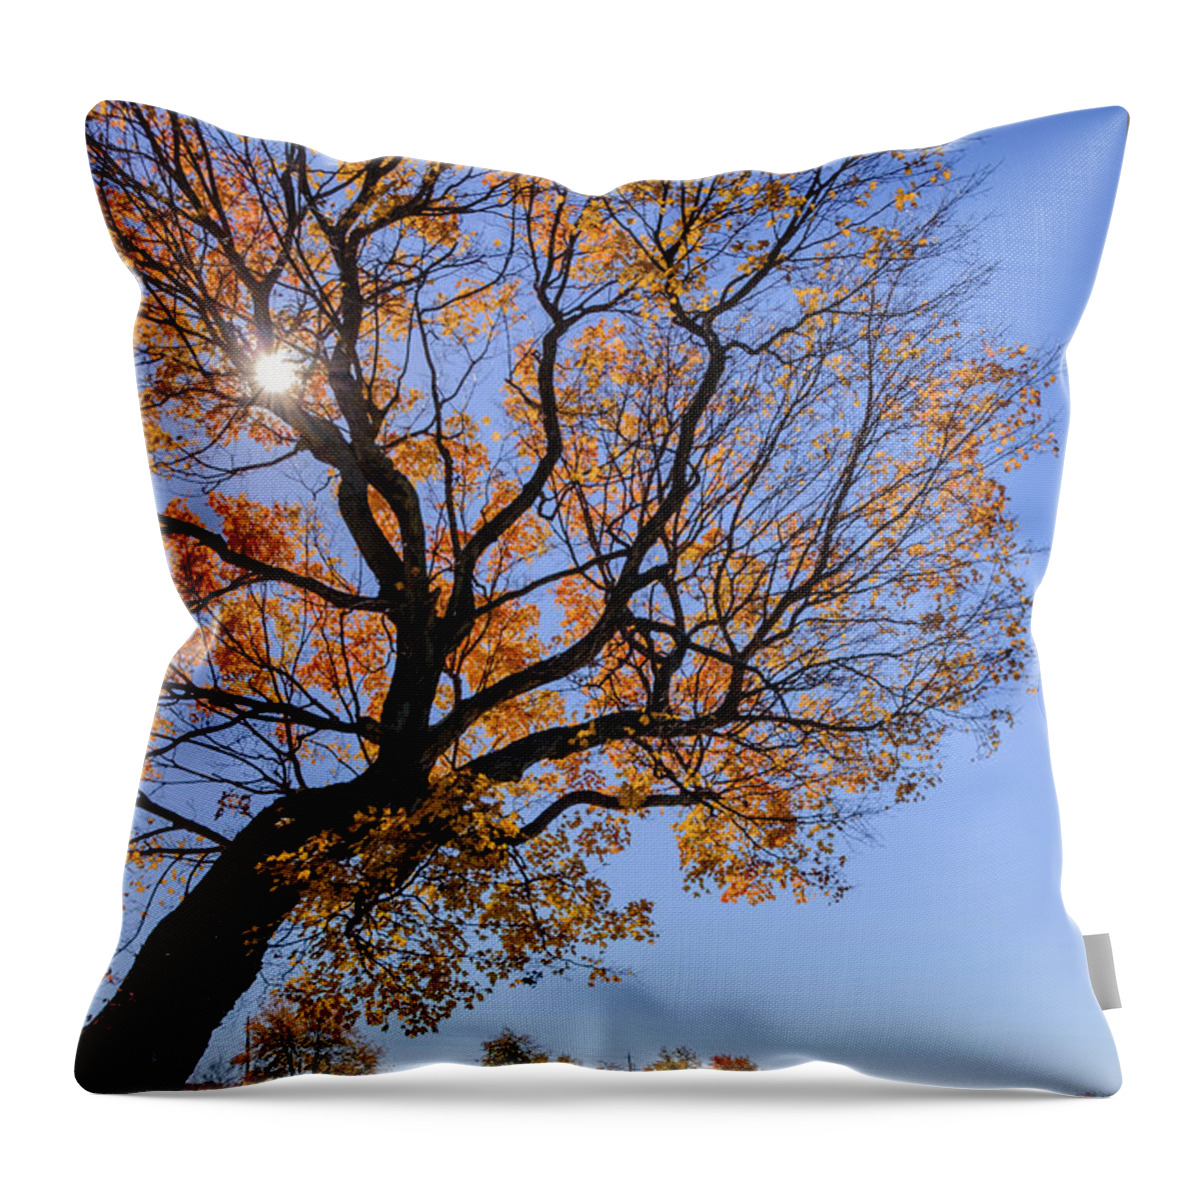 Fall Throw Pillow featuring the photograph Fall Farm by Glenn DiPaola